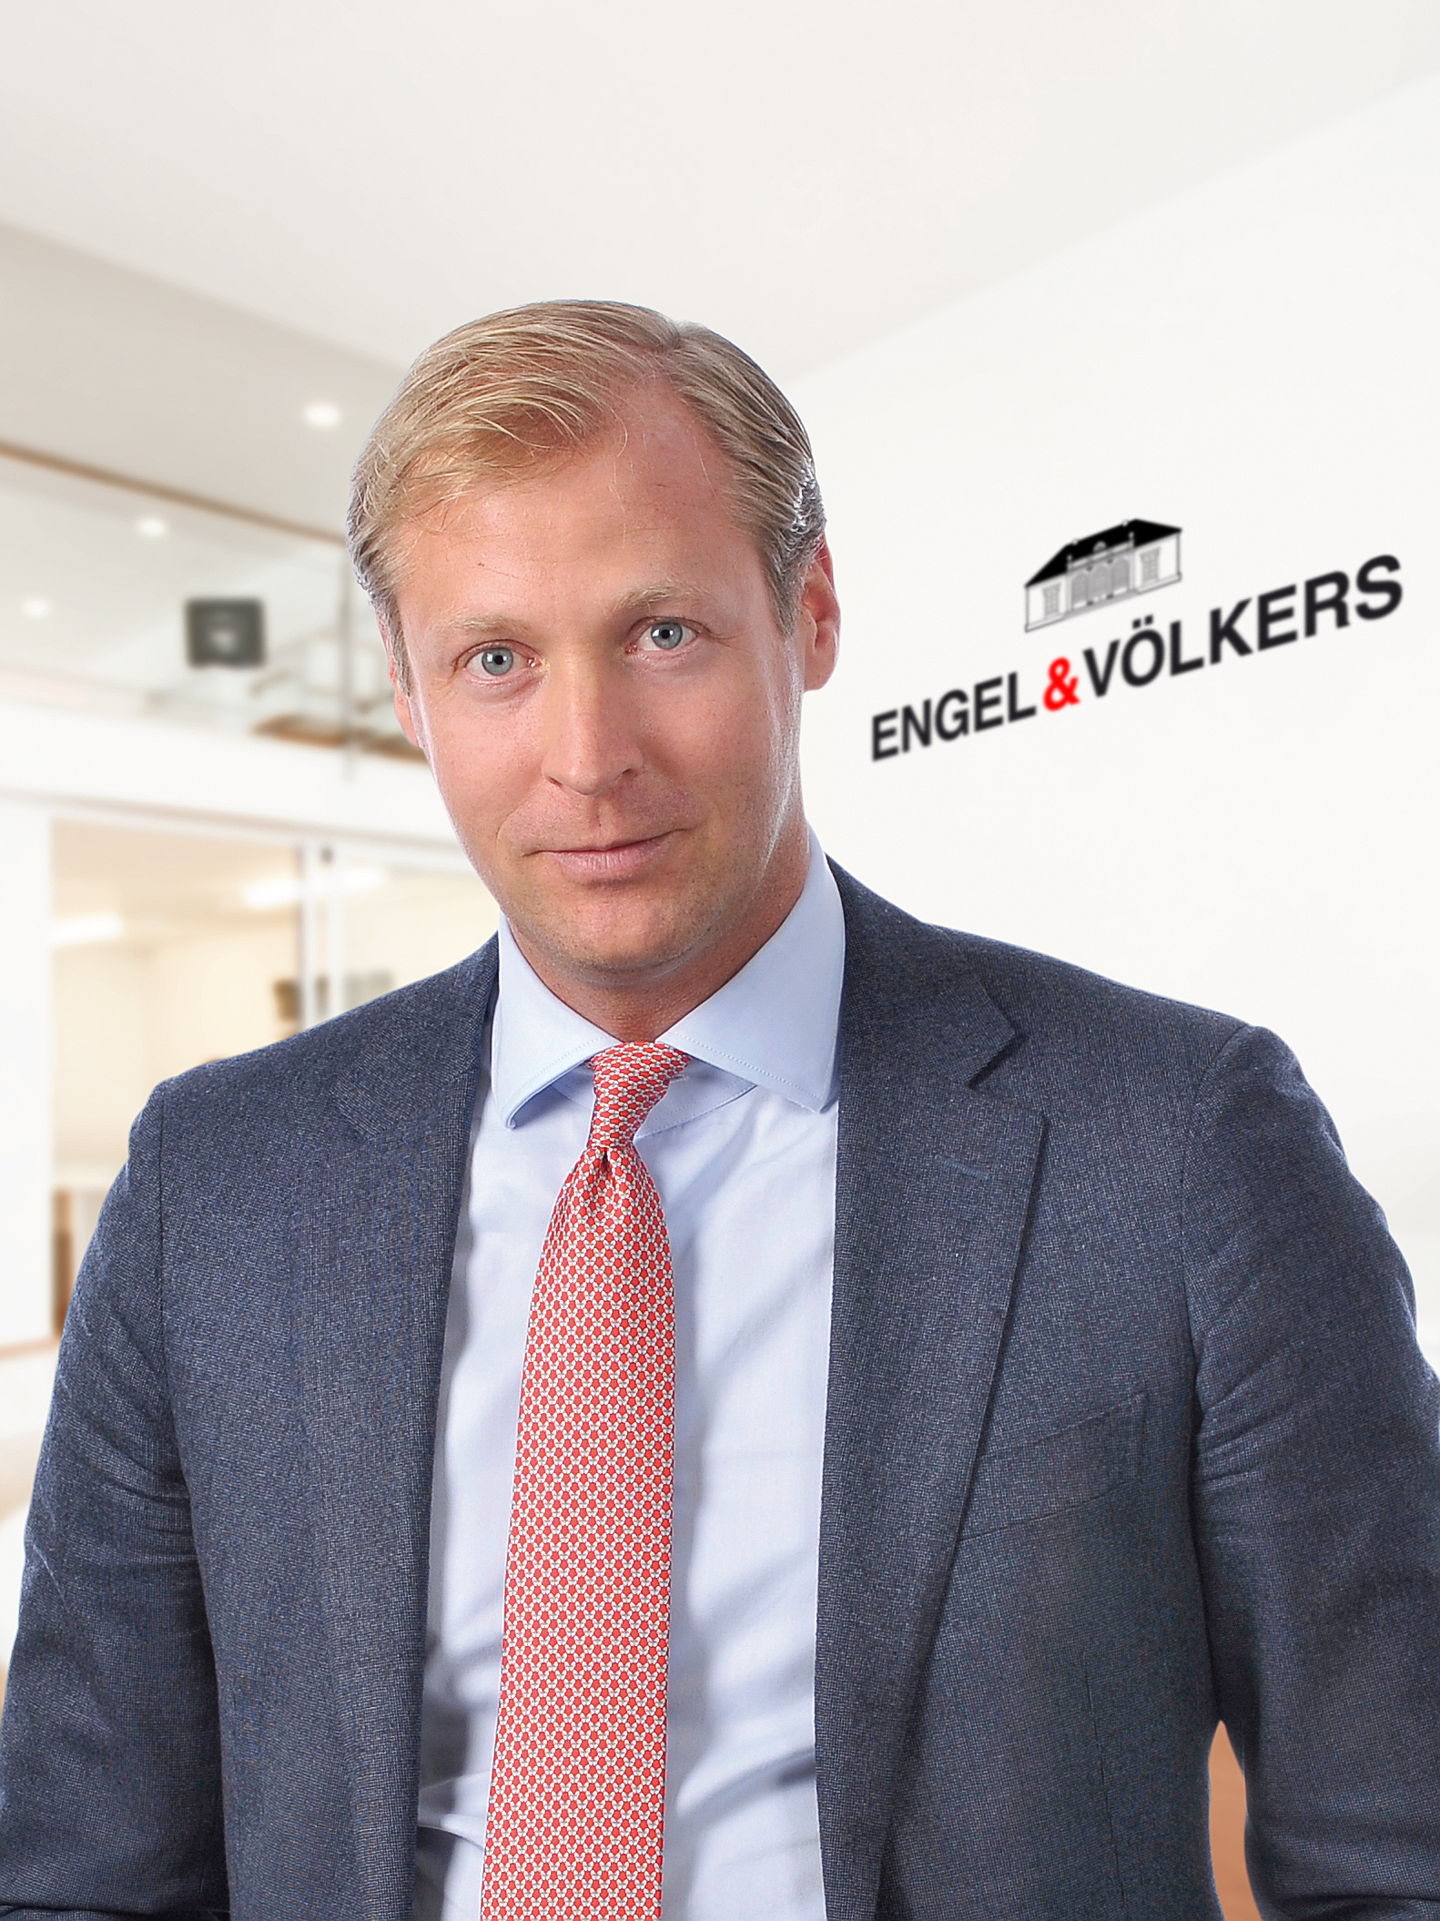  South Africa
- Sven Odia, Co-CEO of Engel & Völkers AG